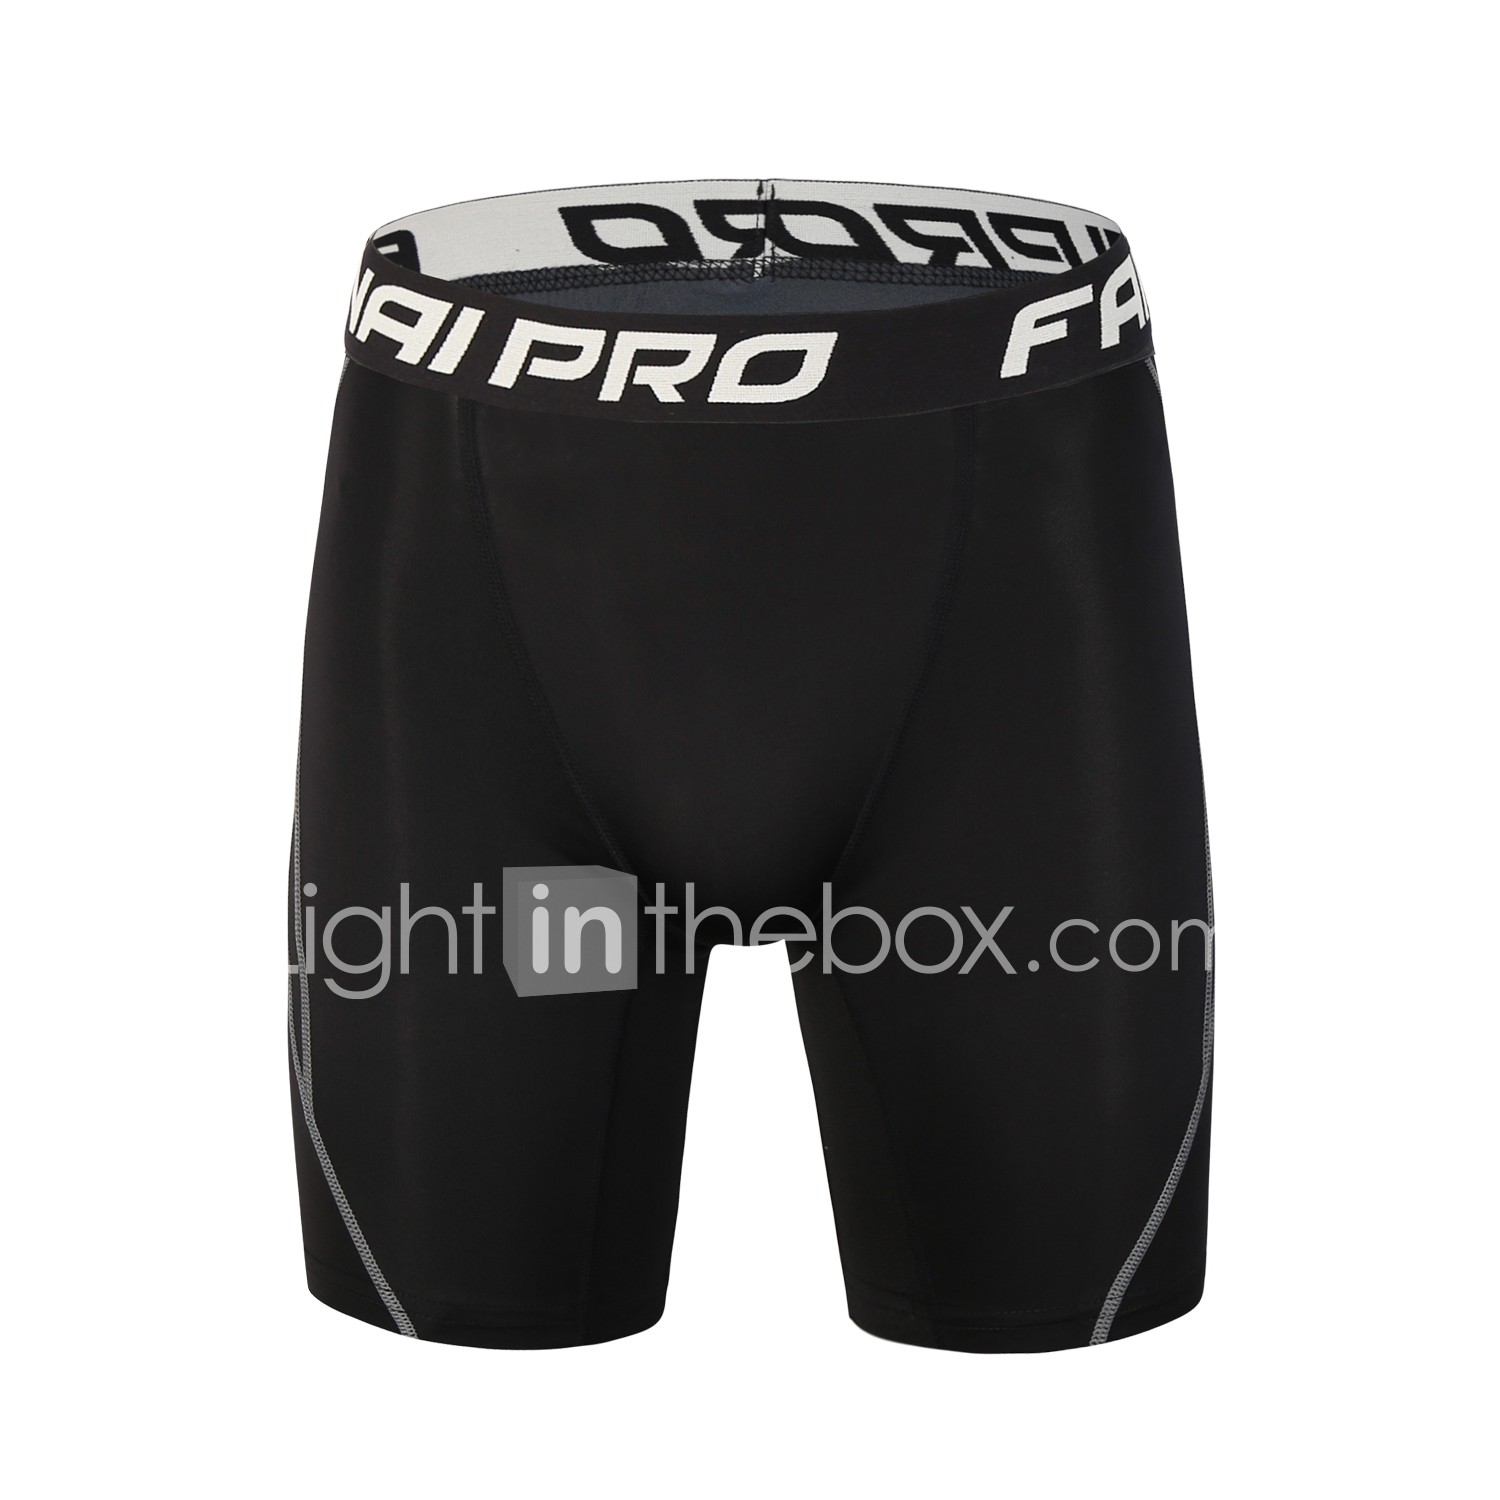 Sub Sports Dual Mens Compression Shorts Black Elasticated Waist Baselayer Short 